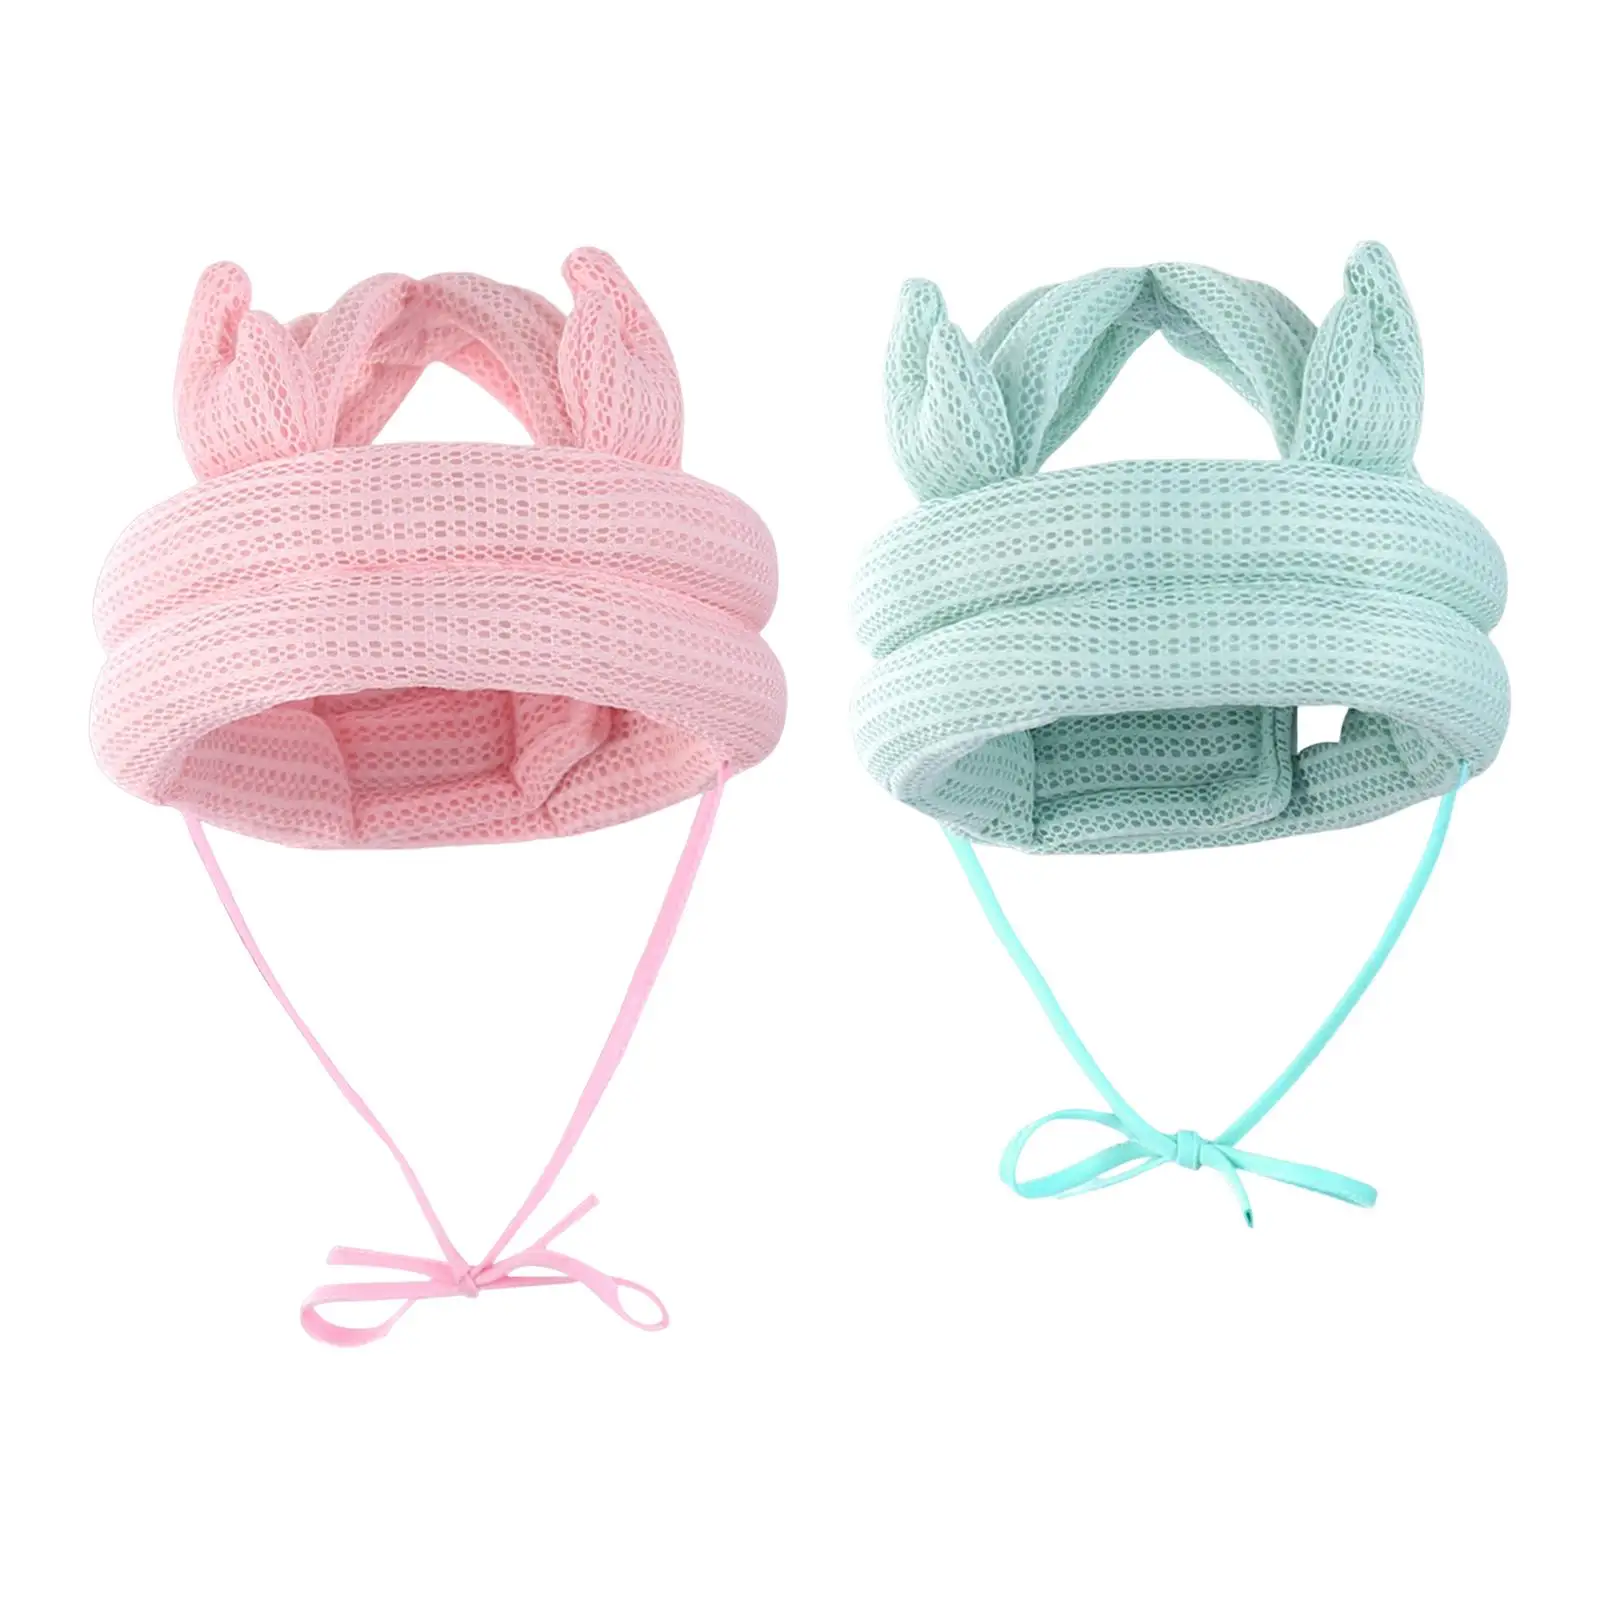 Baby Protective Cap Adjustable Baby Hat for Boys Girls Infant Children